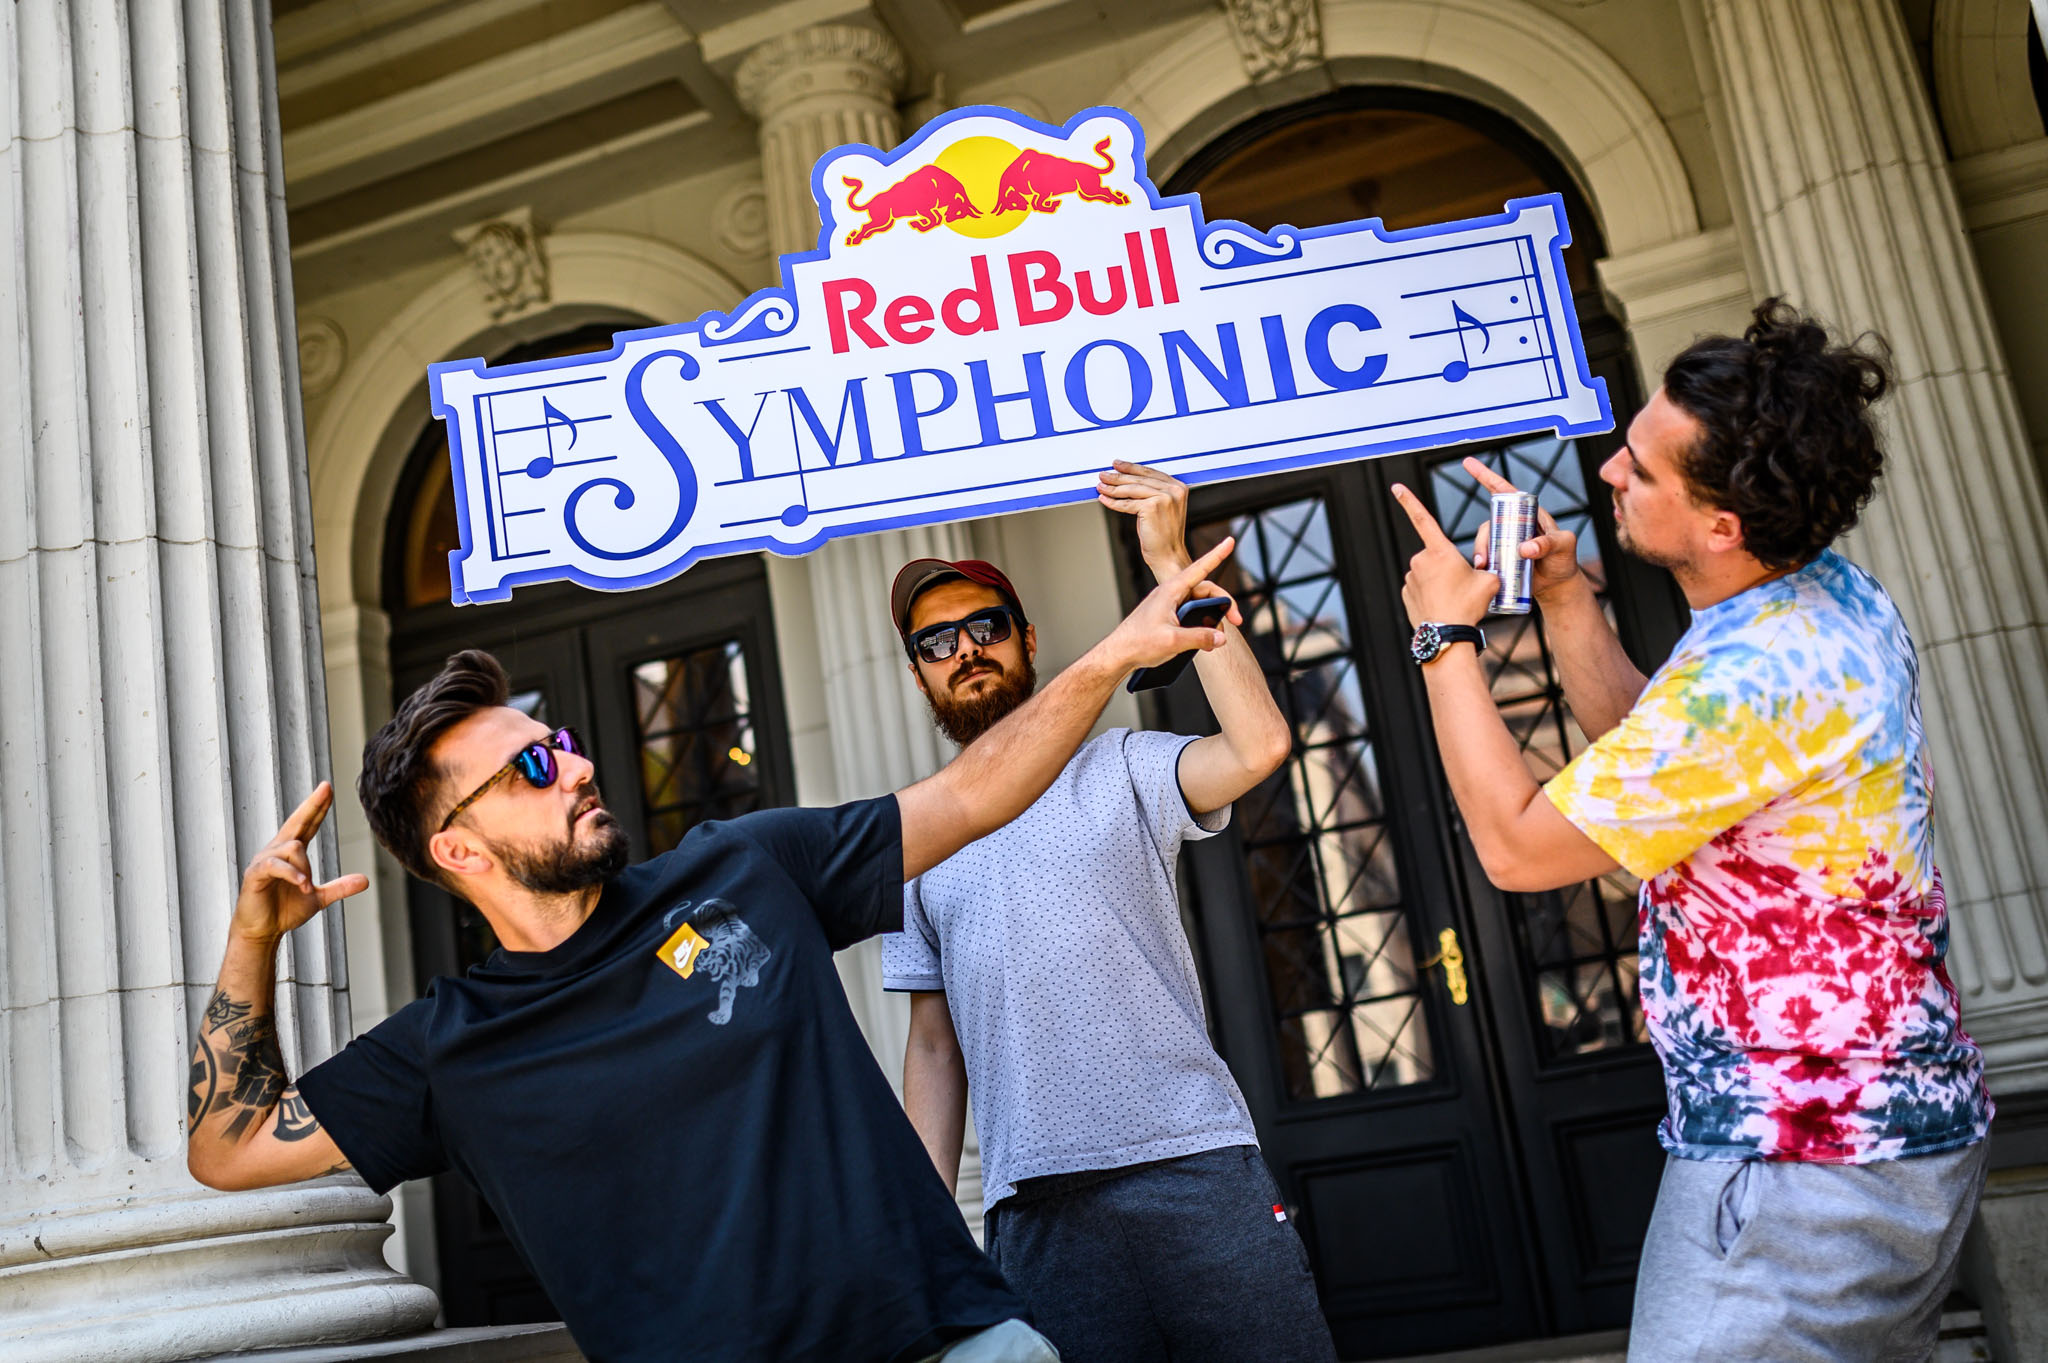 Rasprodane ulaznice za Red Bull Symphonic